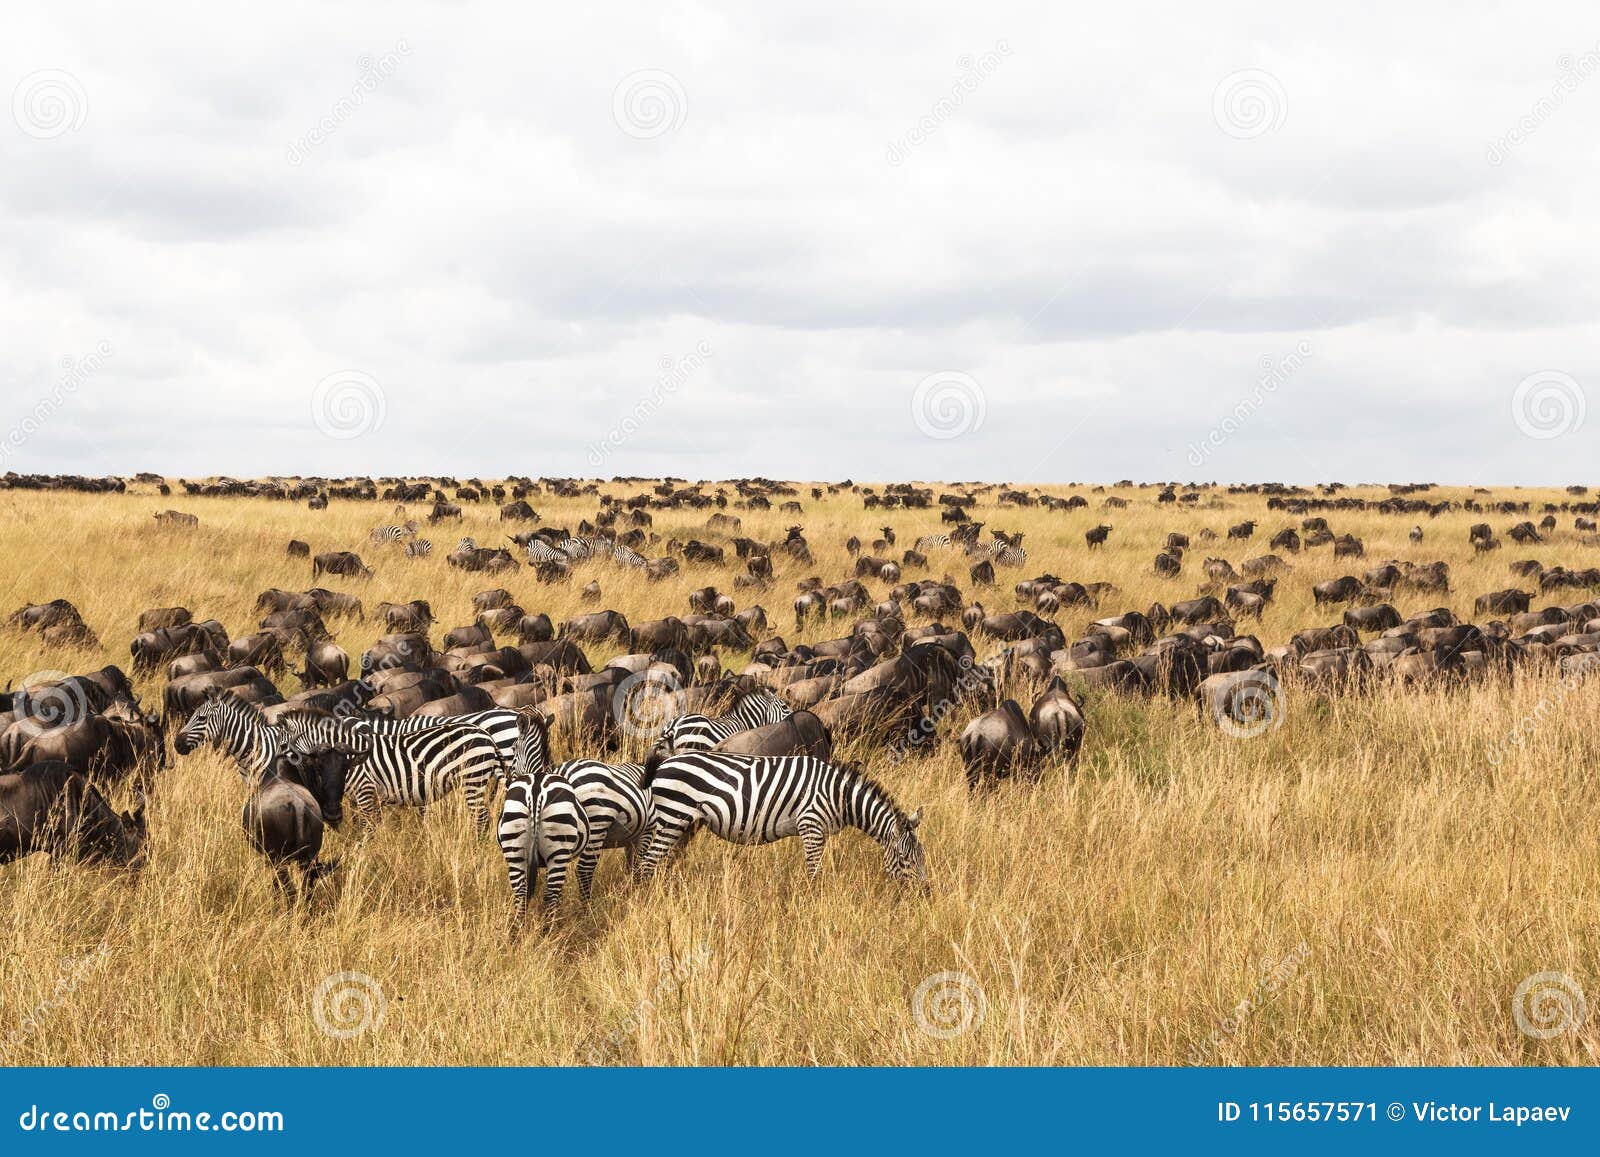 huge herds of ungulates on the serengeti plains. masai mara savanna. kenya, africa